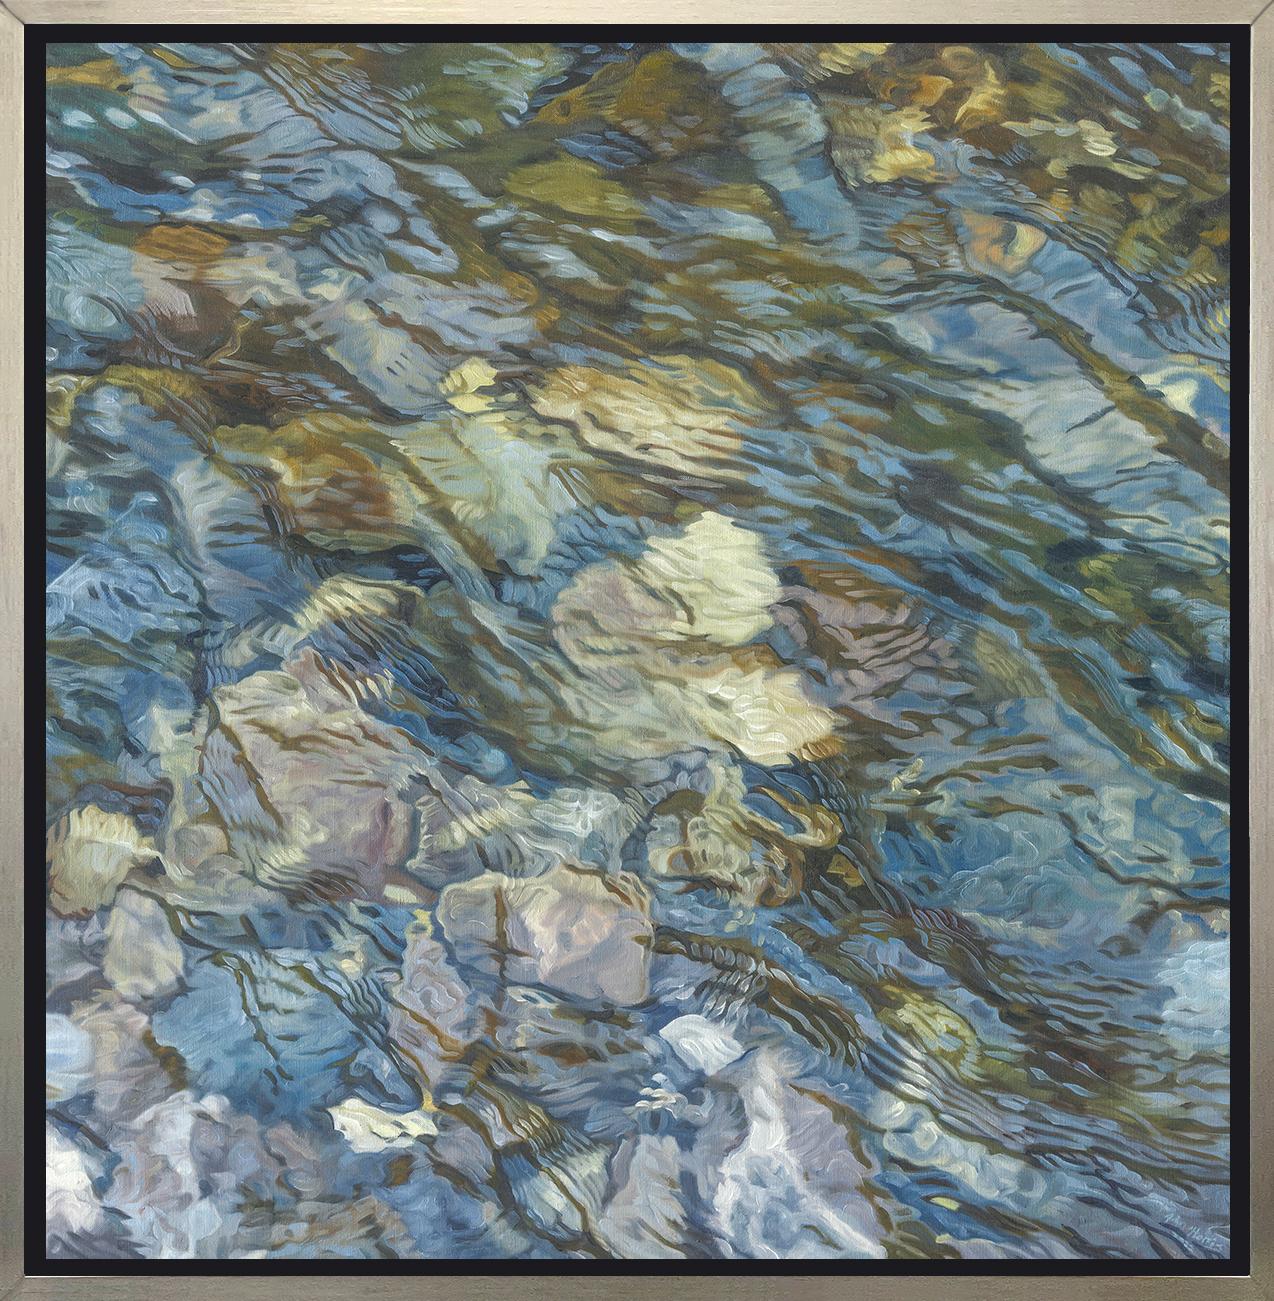 John Harris (painter) Landscape Print - "Riverbed 4, " Framed Limited Edition Giclee Print, 36" x 36"